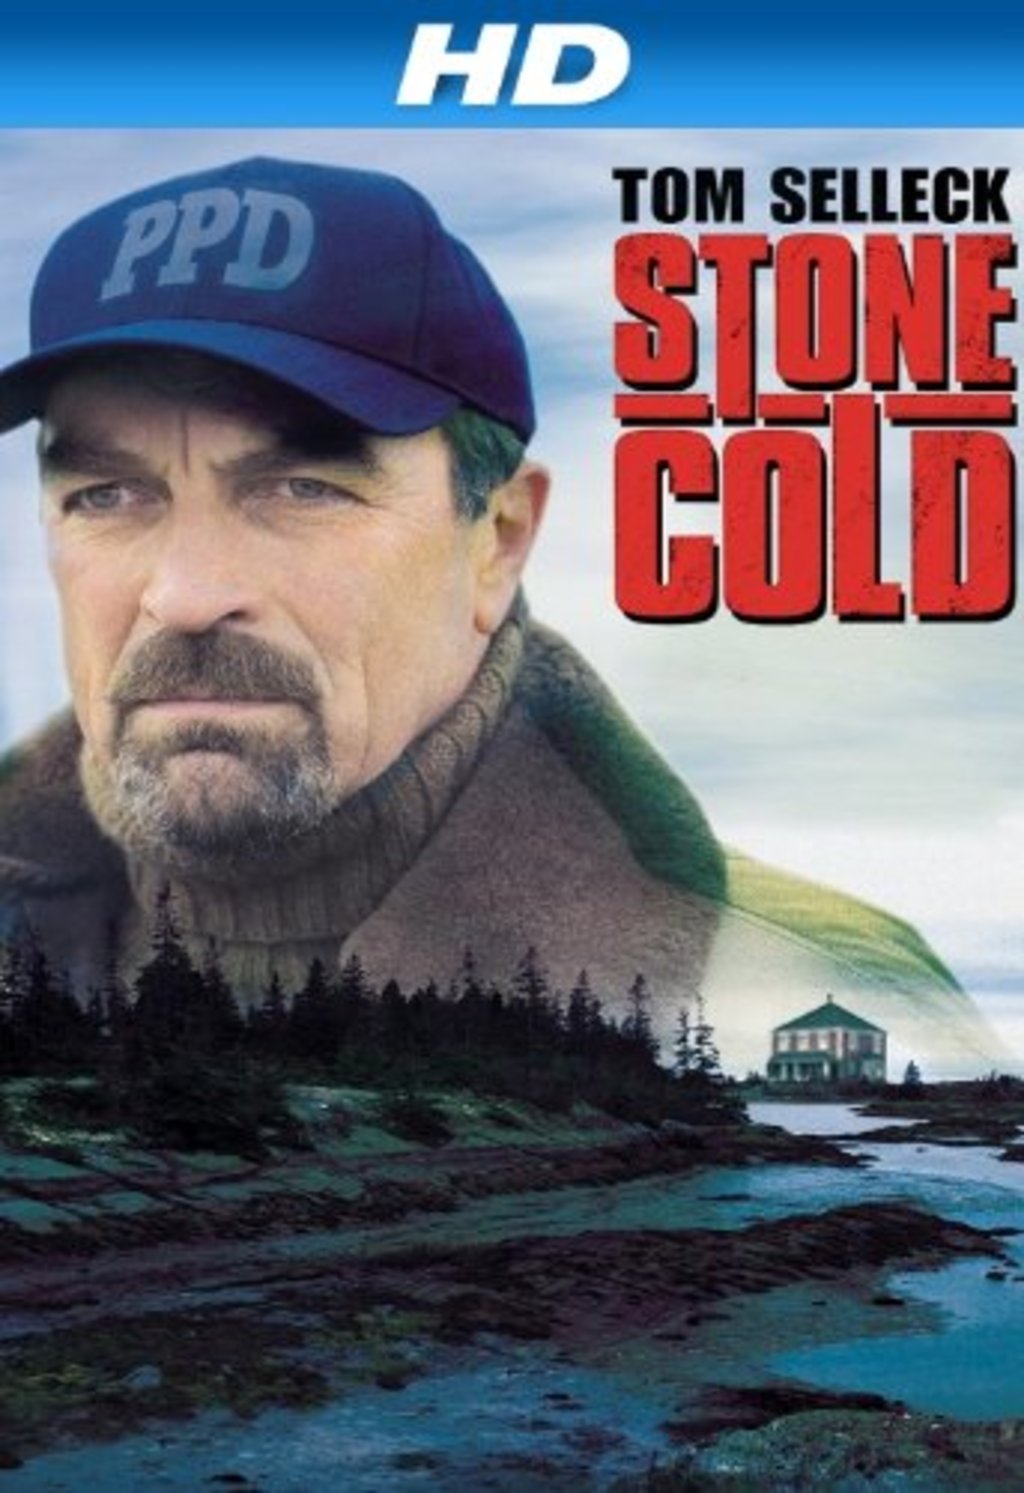 Watch Jesse Stone Stone Cold on Netflix Today!